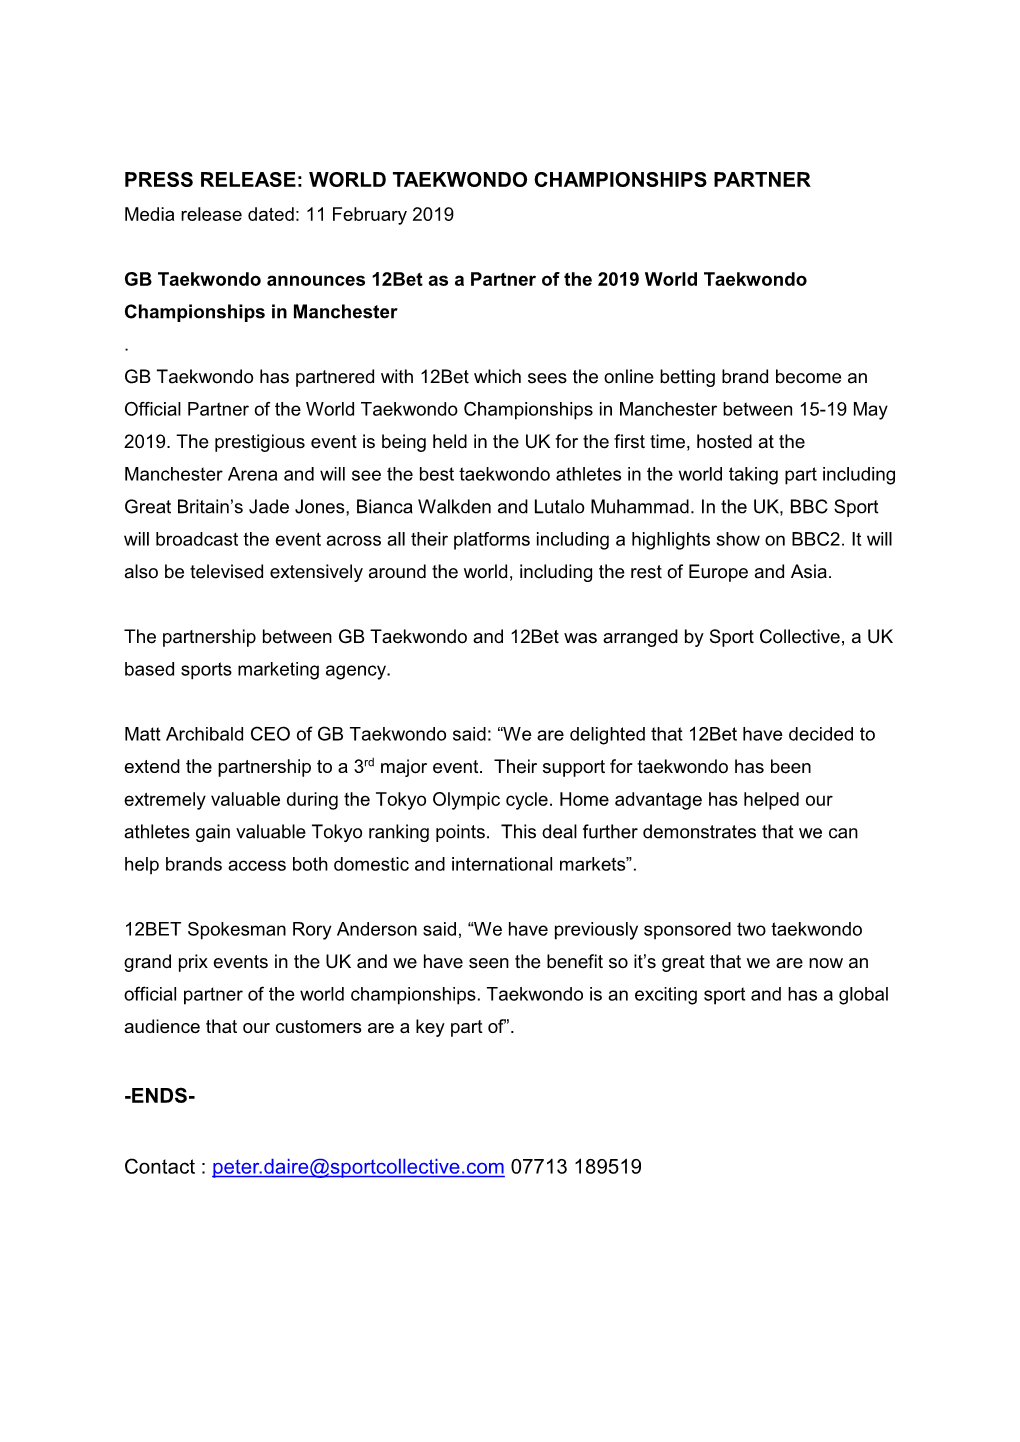 WORLD TAEKWONDO CHAMPIONSHIPS PARTNER Media Release Dated: 11 February 2019